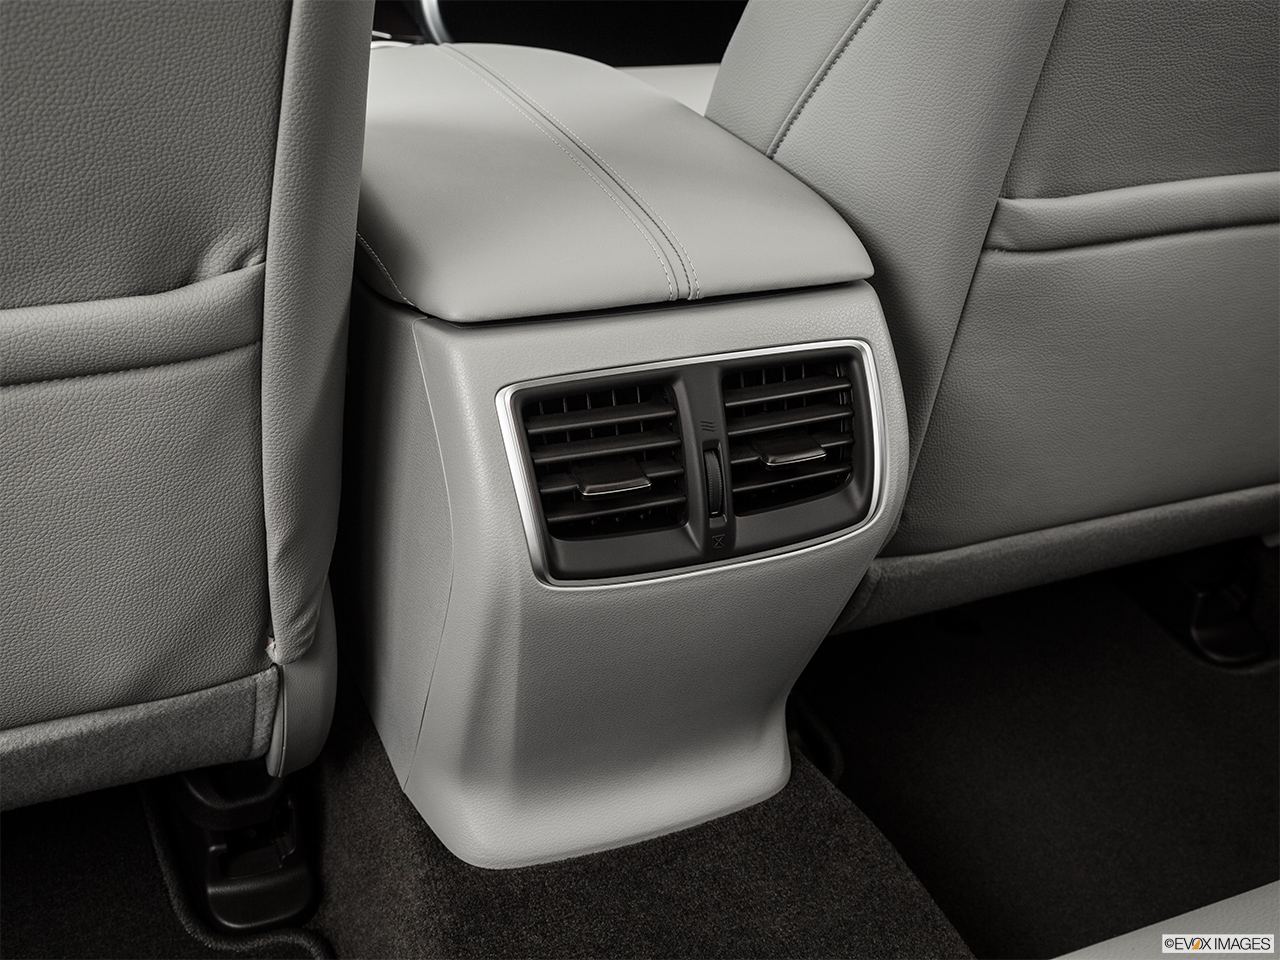 2015 Acura TLX 3.5 V-6 9-AT P-AWS Rear A/C controls. 